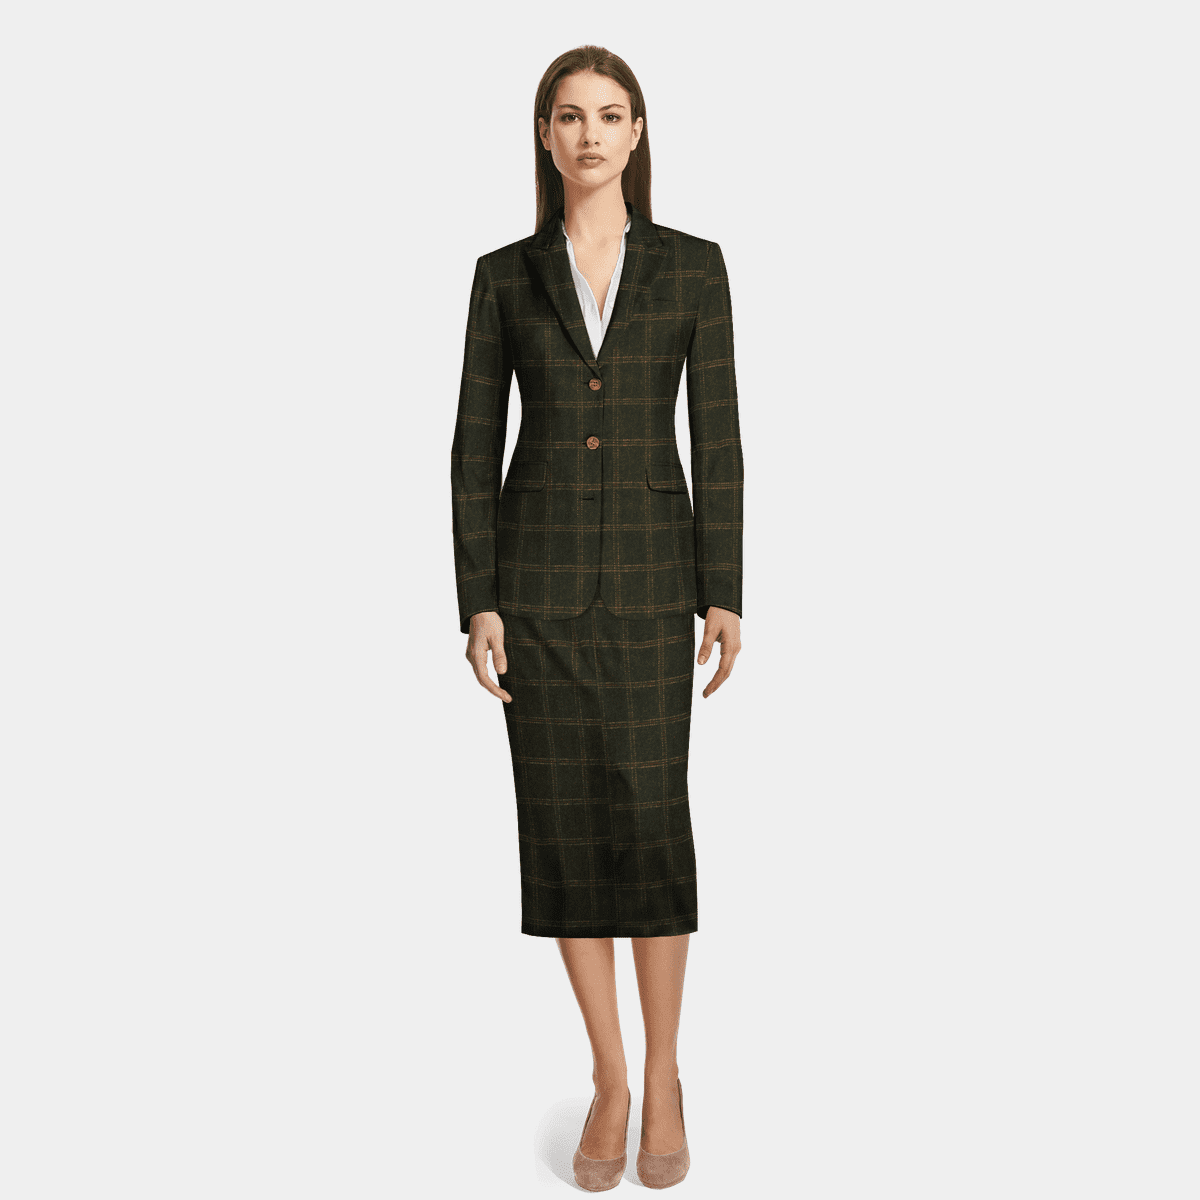 Premium Army Green wool short Skirt Suit with peak lapels